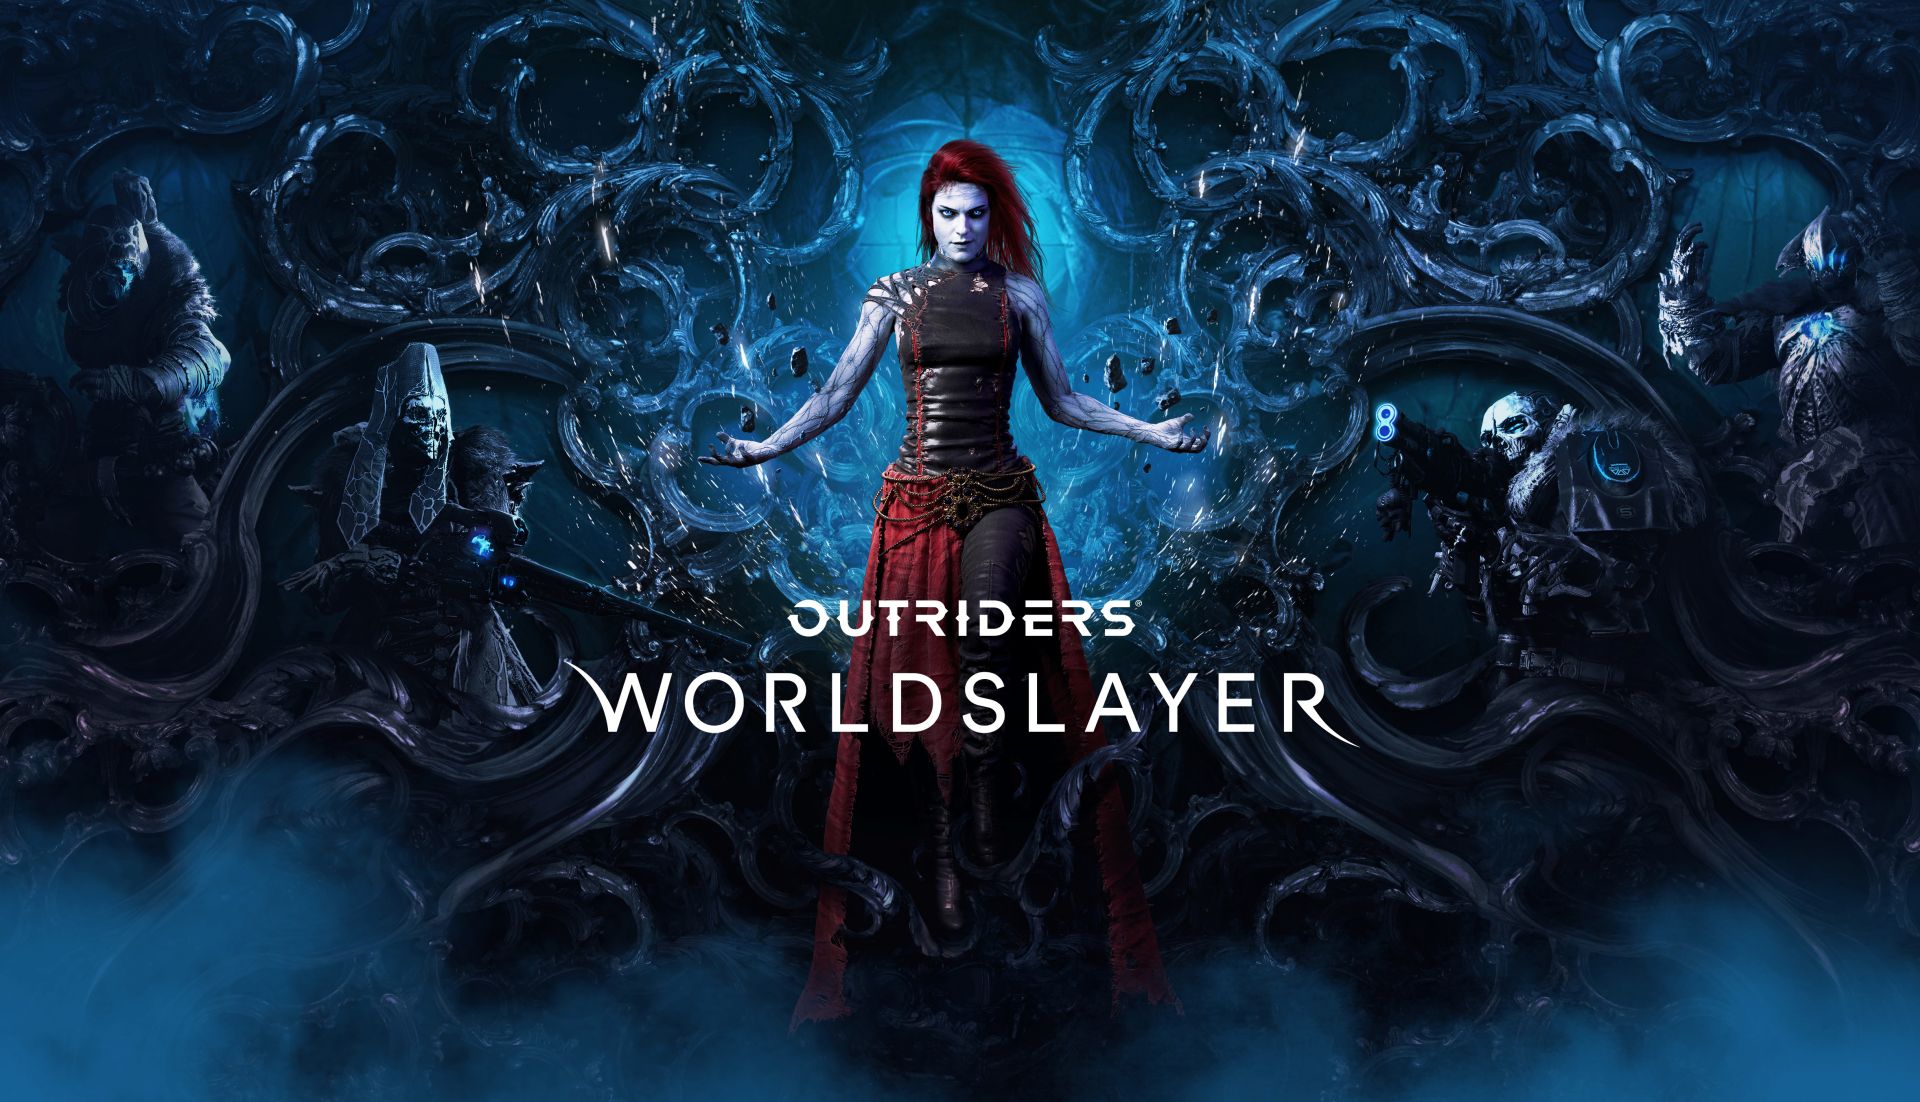 Outriders Worldslayer Key Art